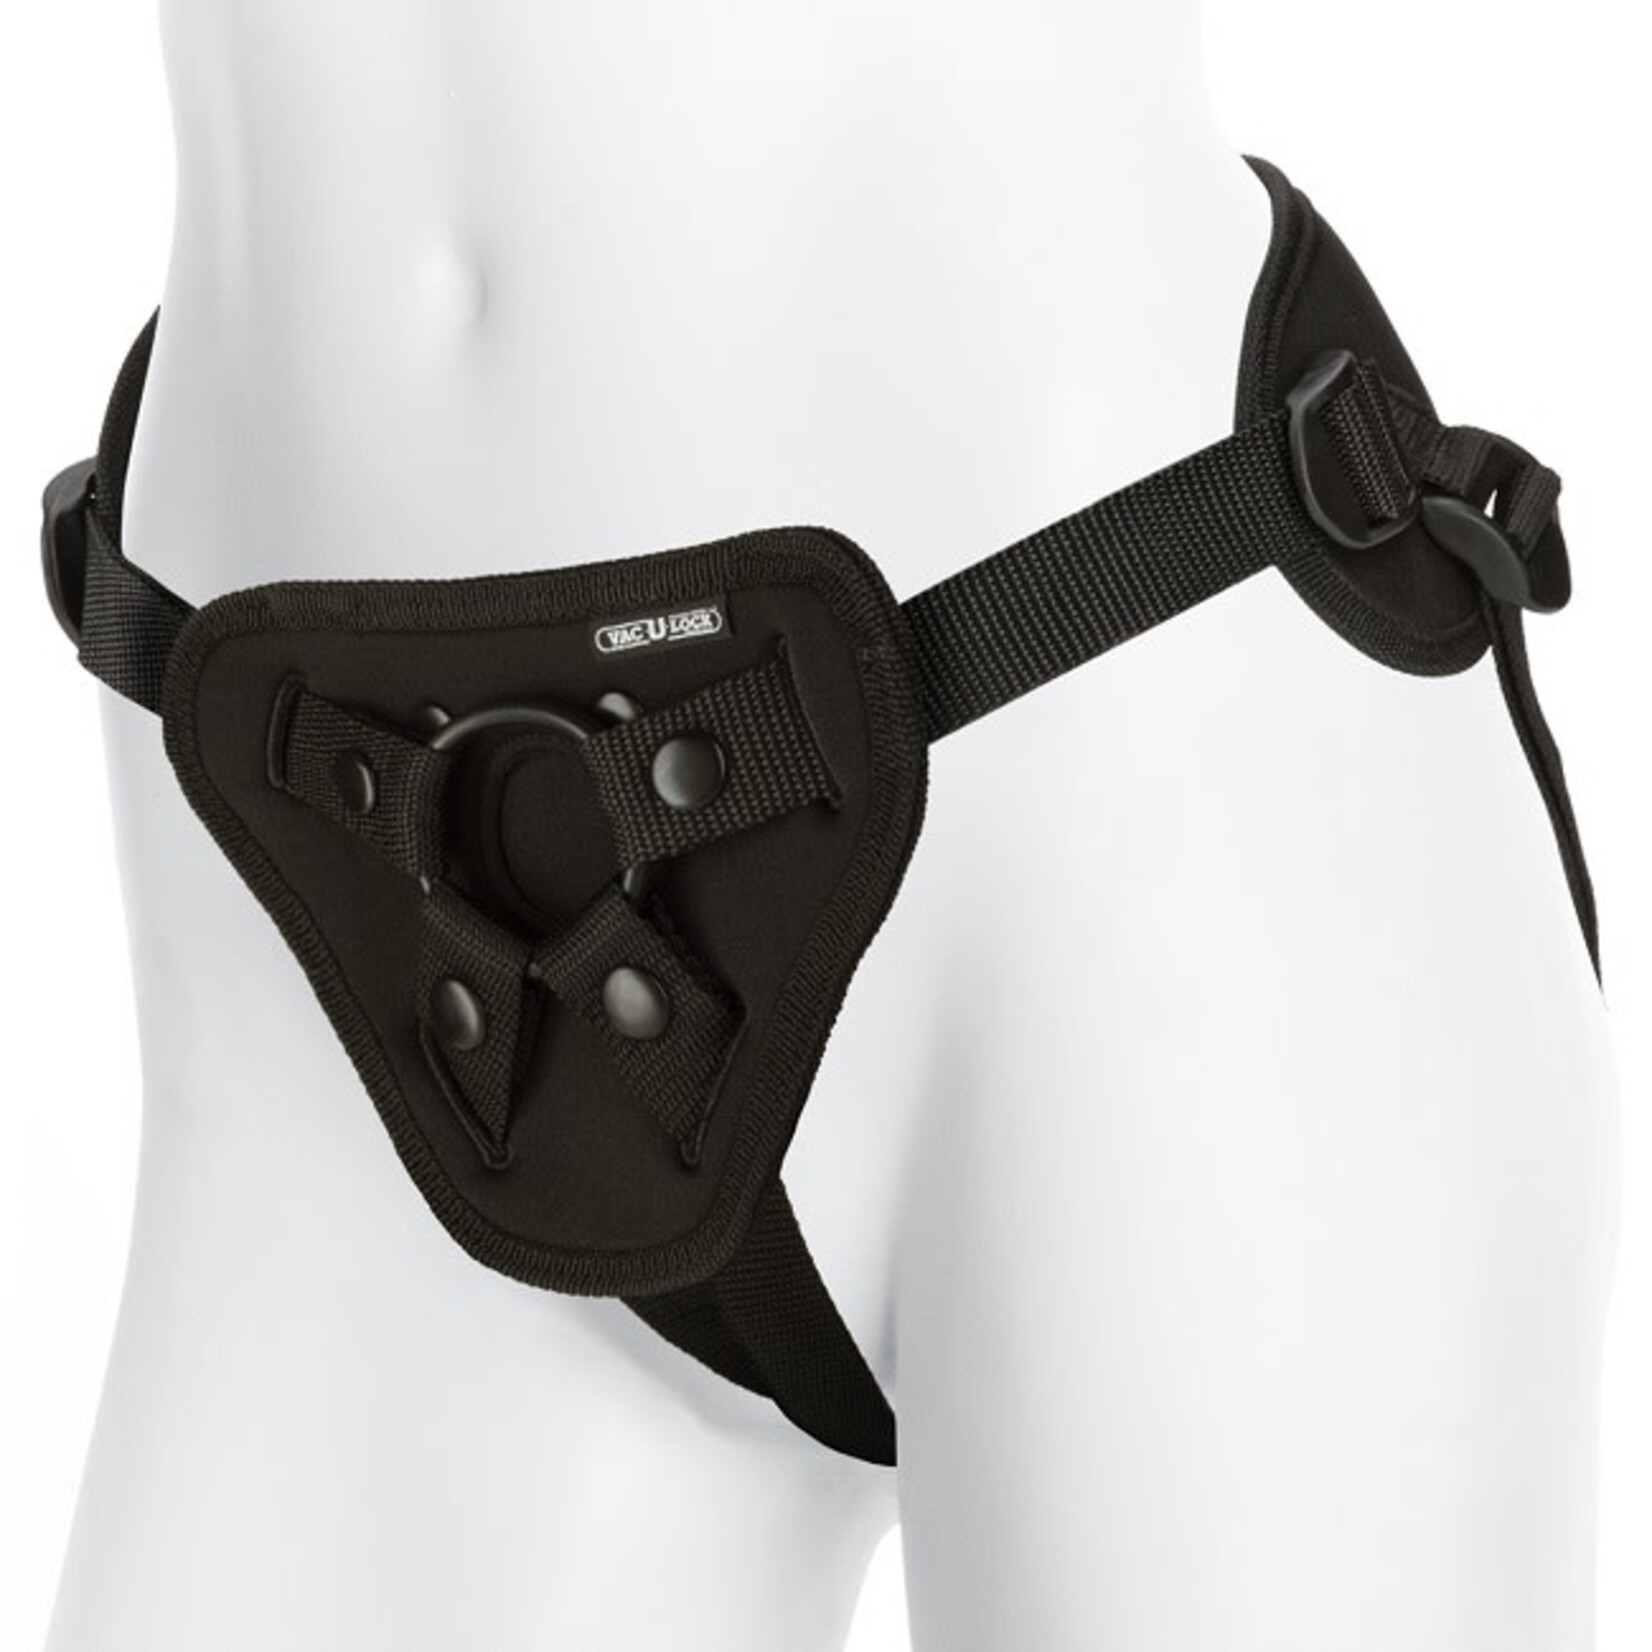 Doc Johnson Vac-U-Lock Suspender Harness with Plug